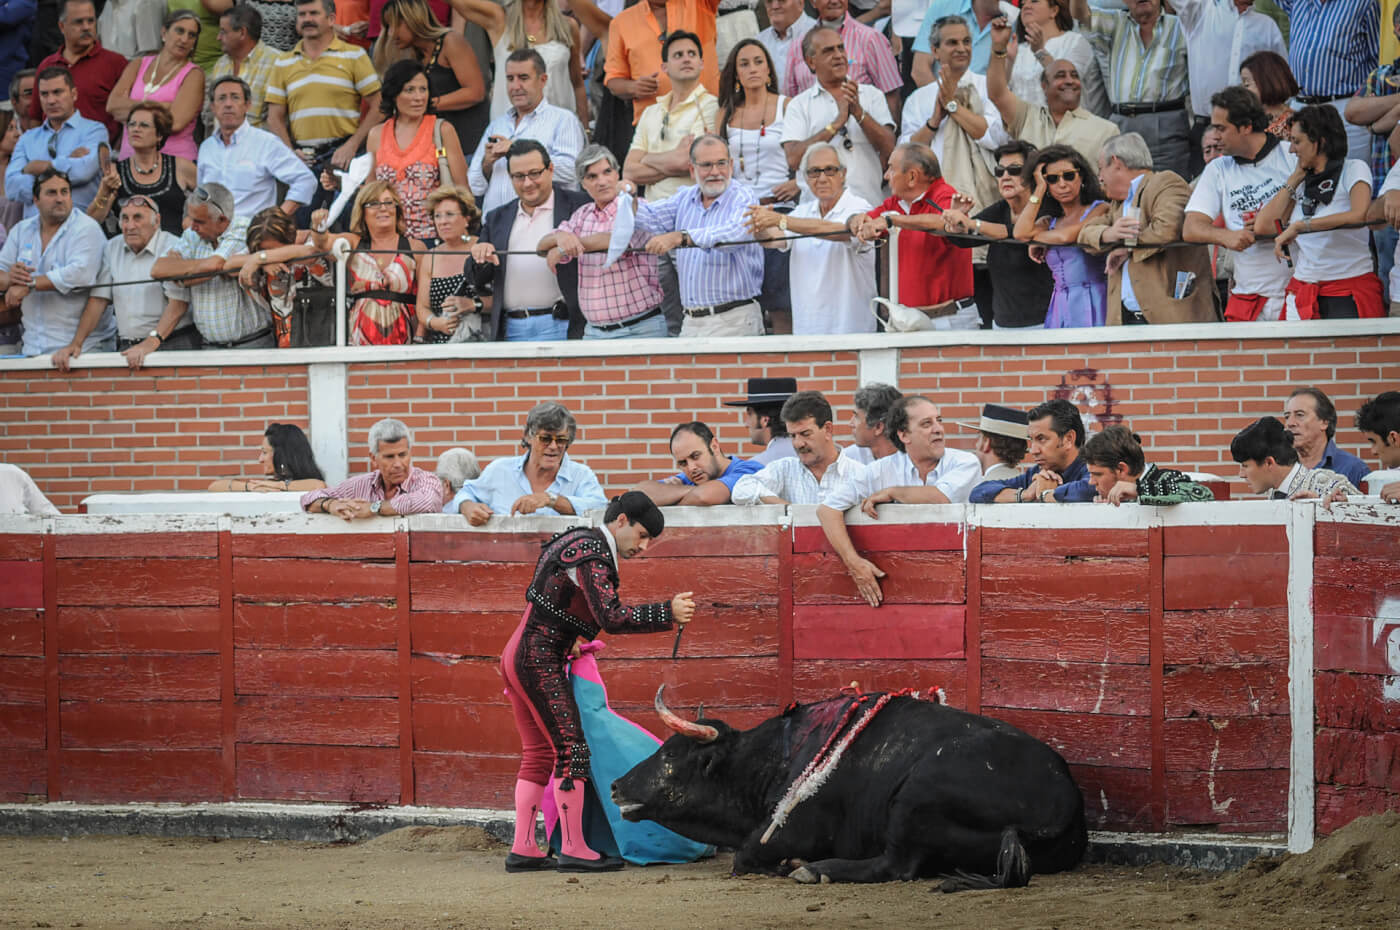 A matador prepares to deal the final blow to a bull during a bullfight.